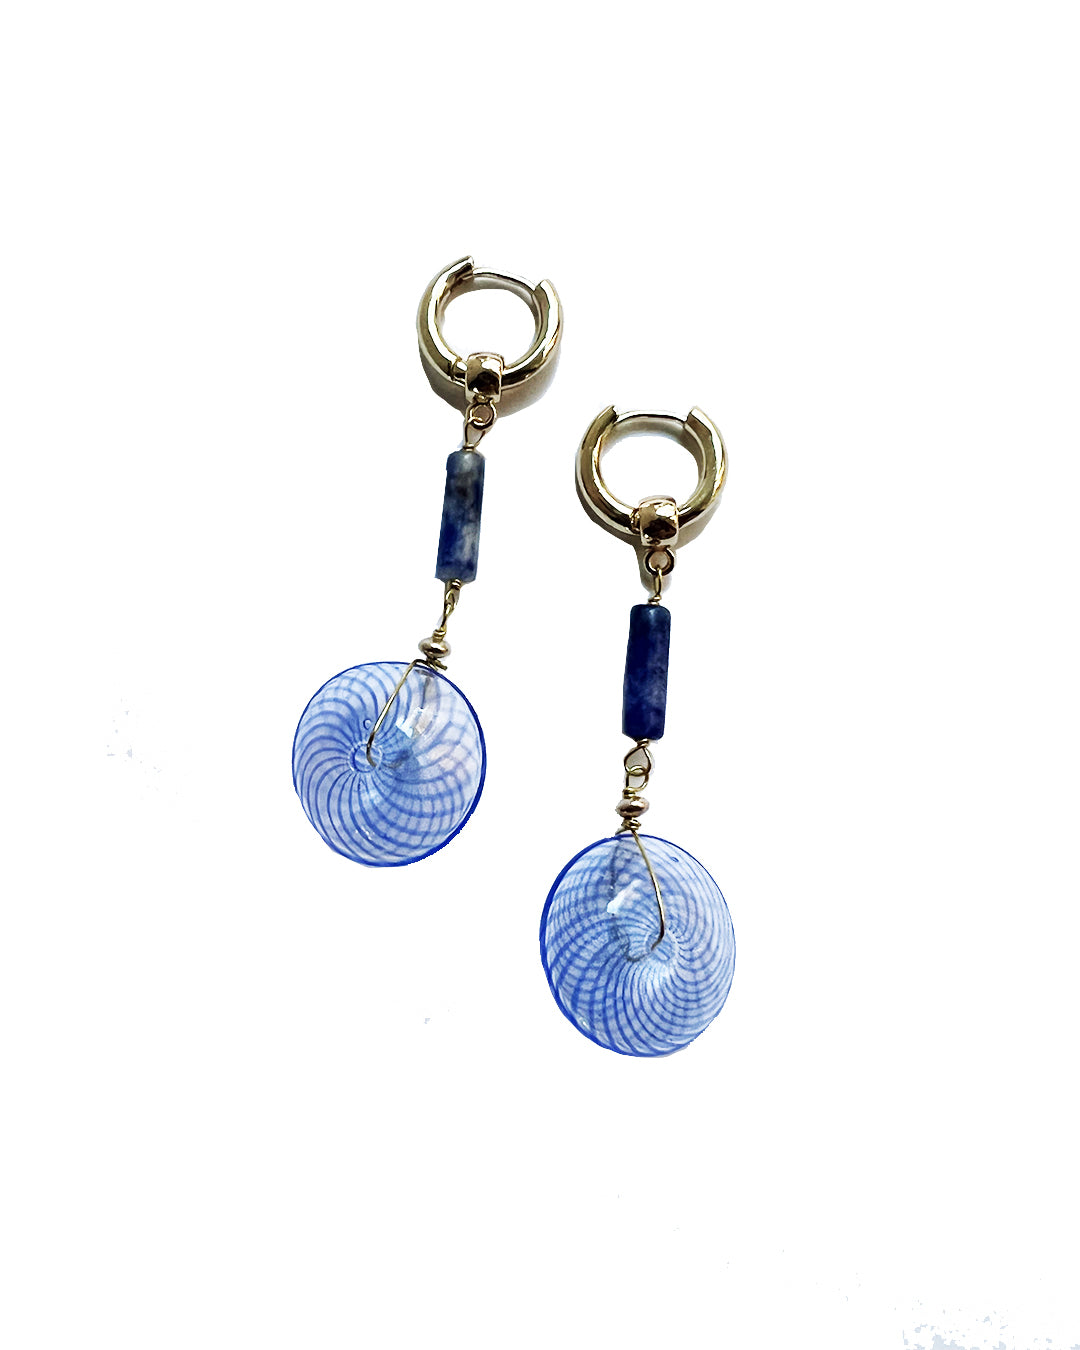 Semifine Huggies - Sodalite Blue Glass Earrings | cukimber designs